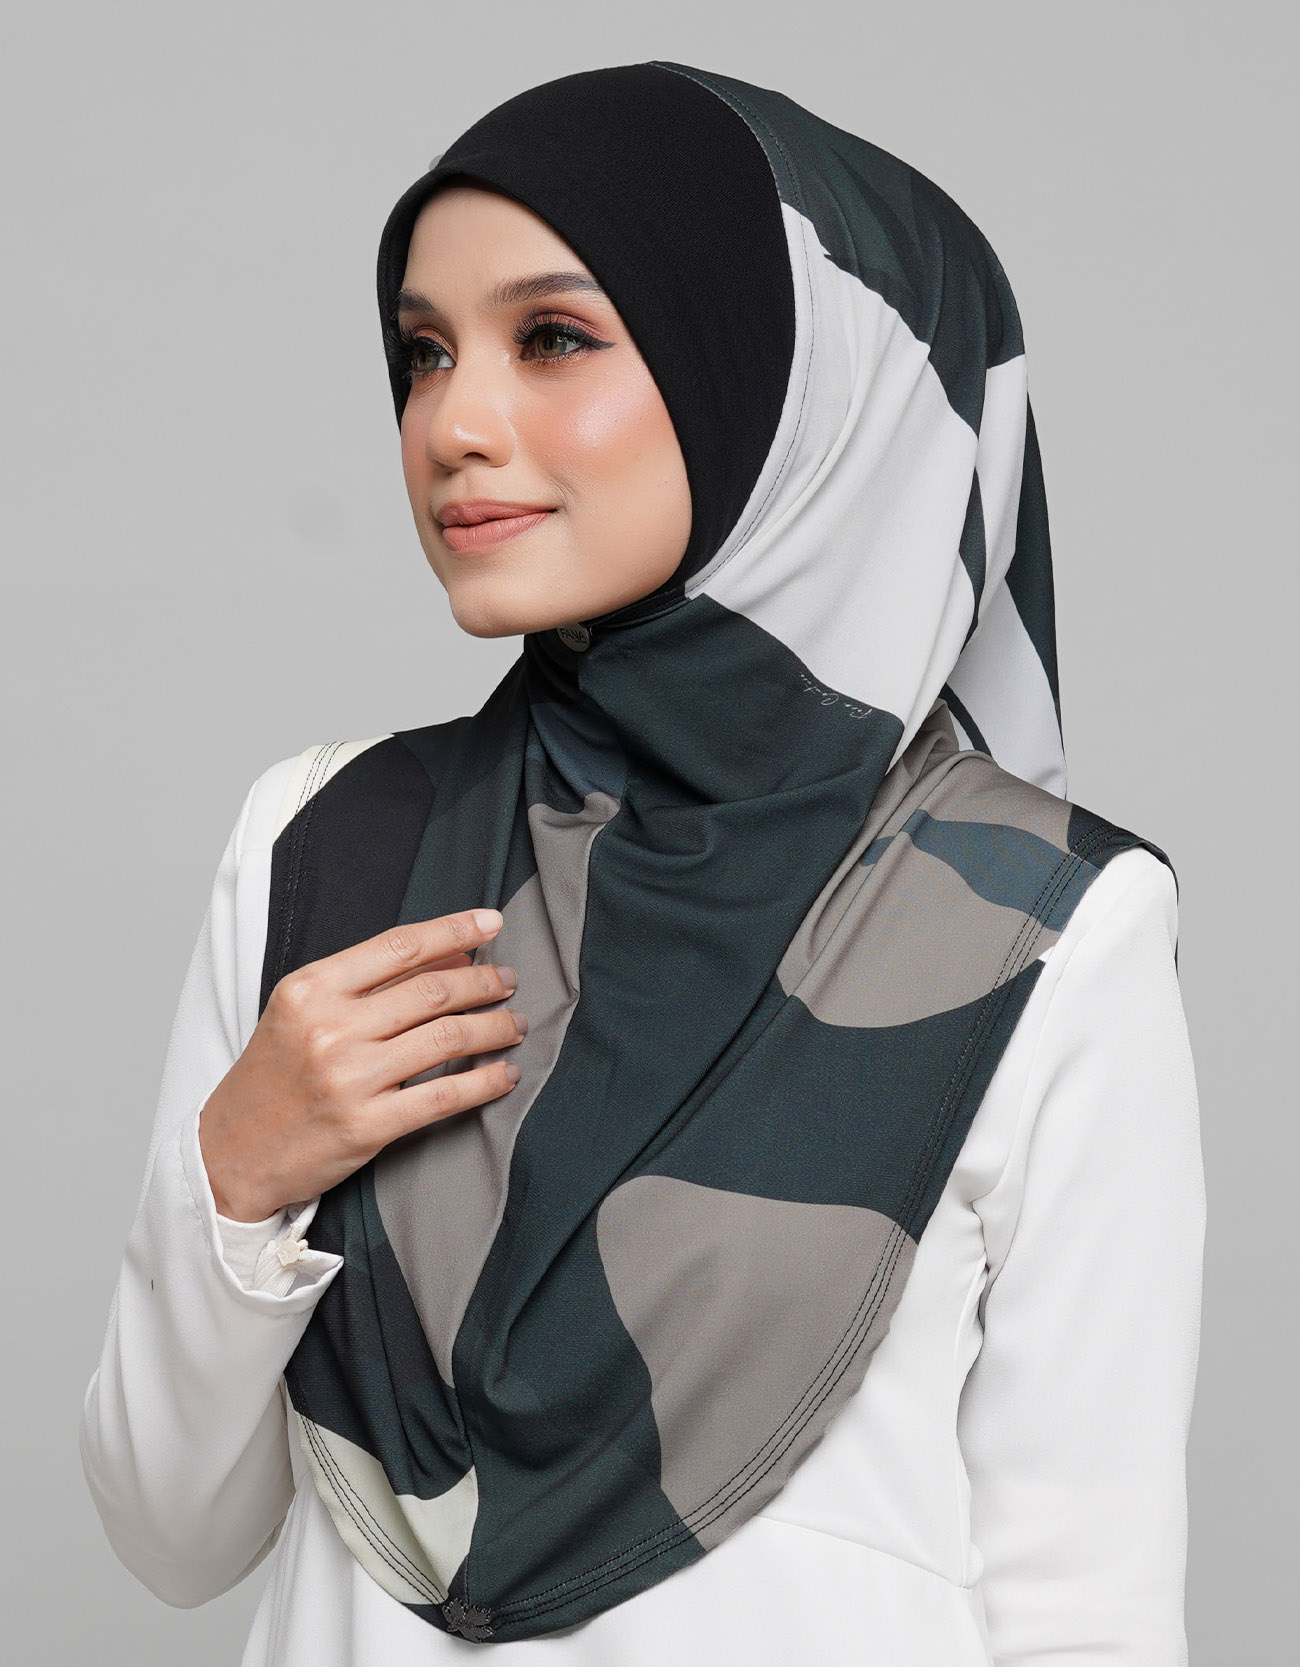 Express Hijab Damia Signature 09 - Black Edition